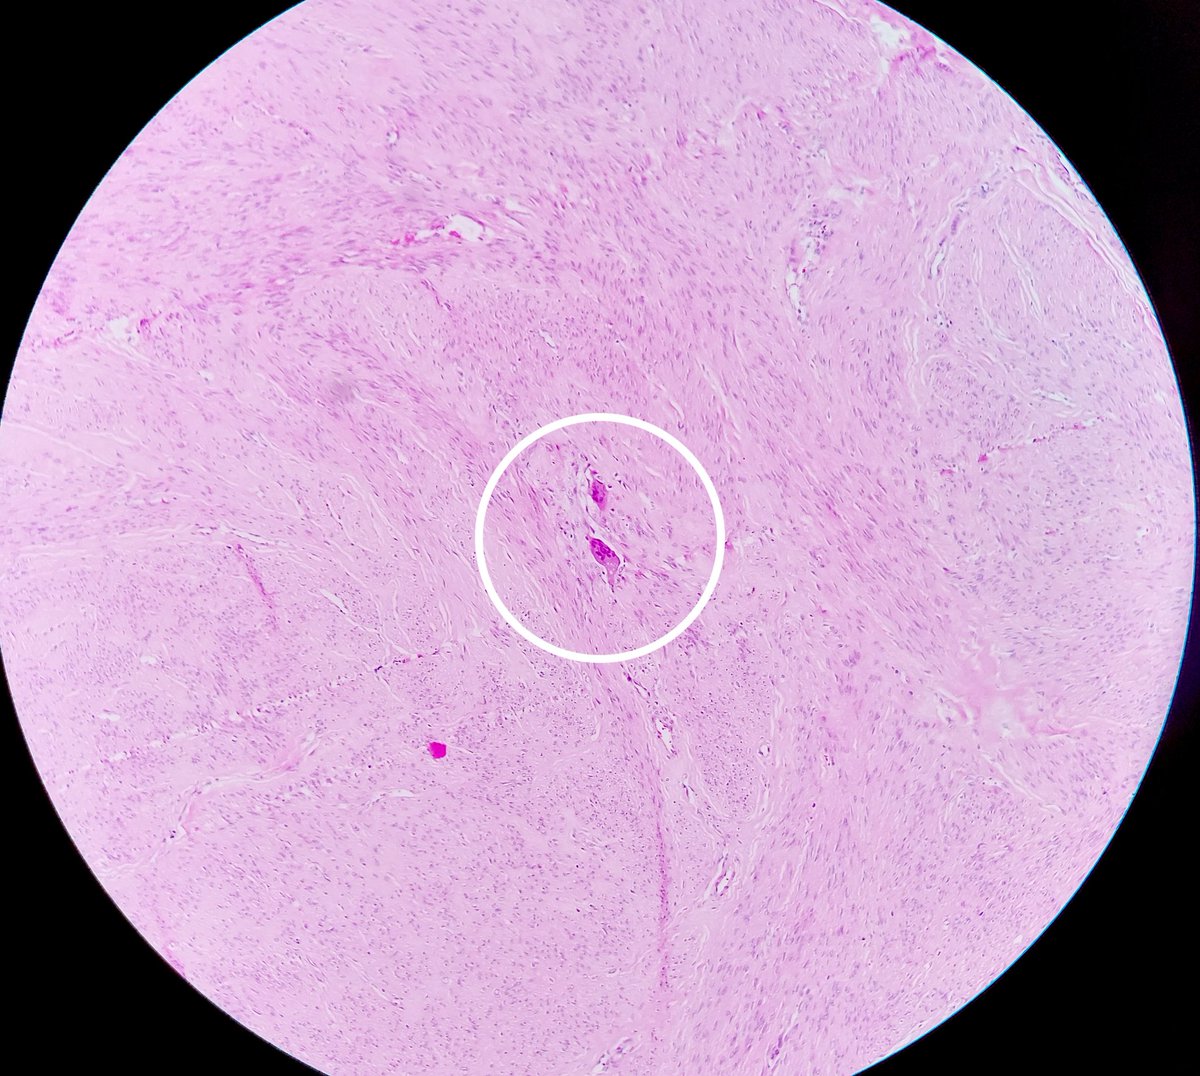 #BeautyInTheBenign #leiomyoma with osteoclastic giant cells. #PathTwitter #gynpath pubmed.ncbi.nlm.nih.gov/26166717/